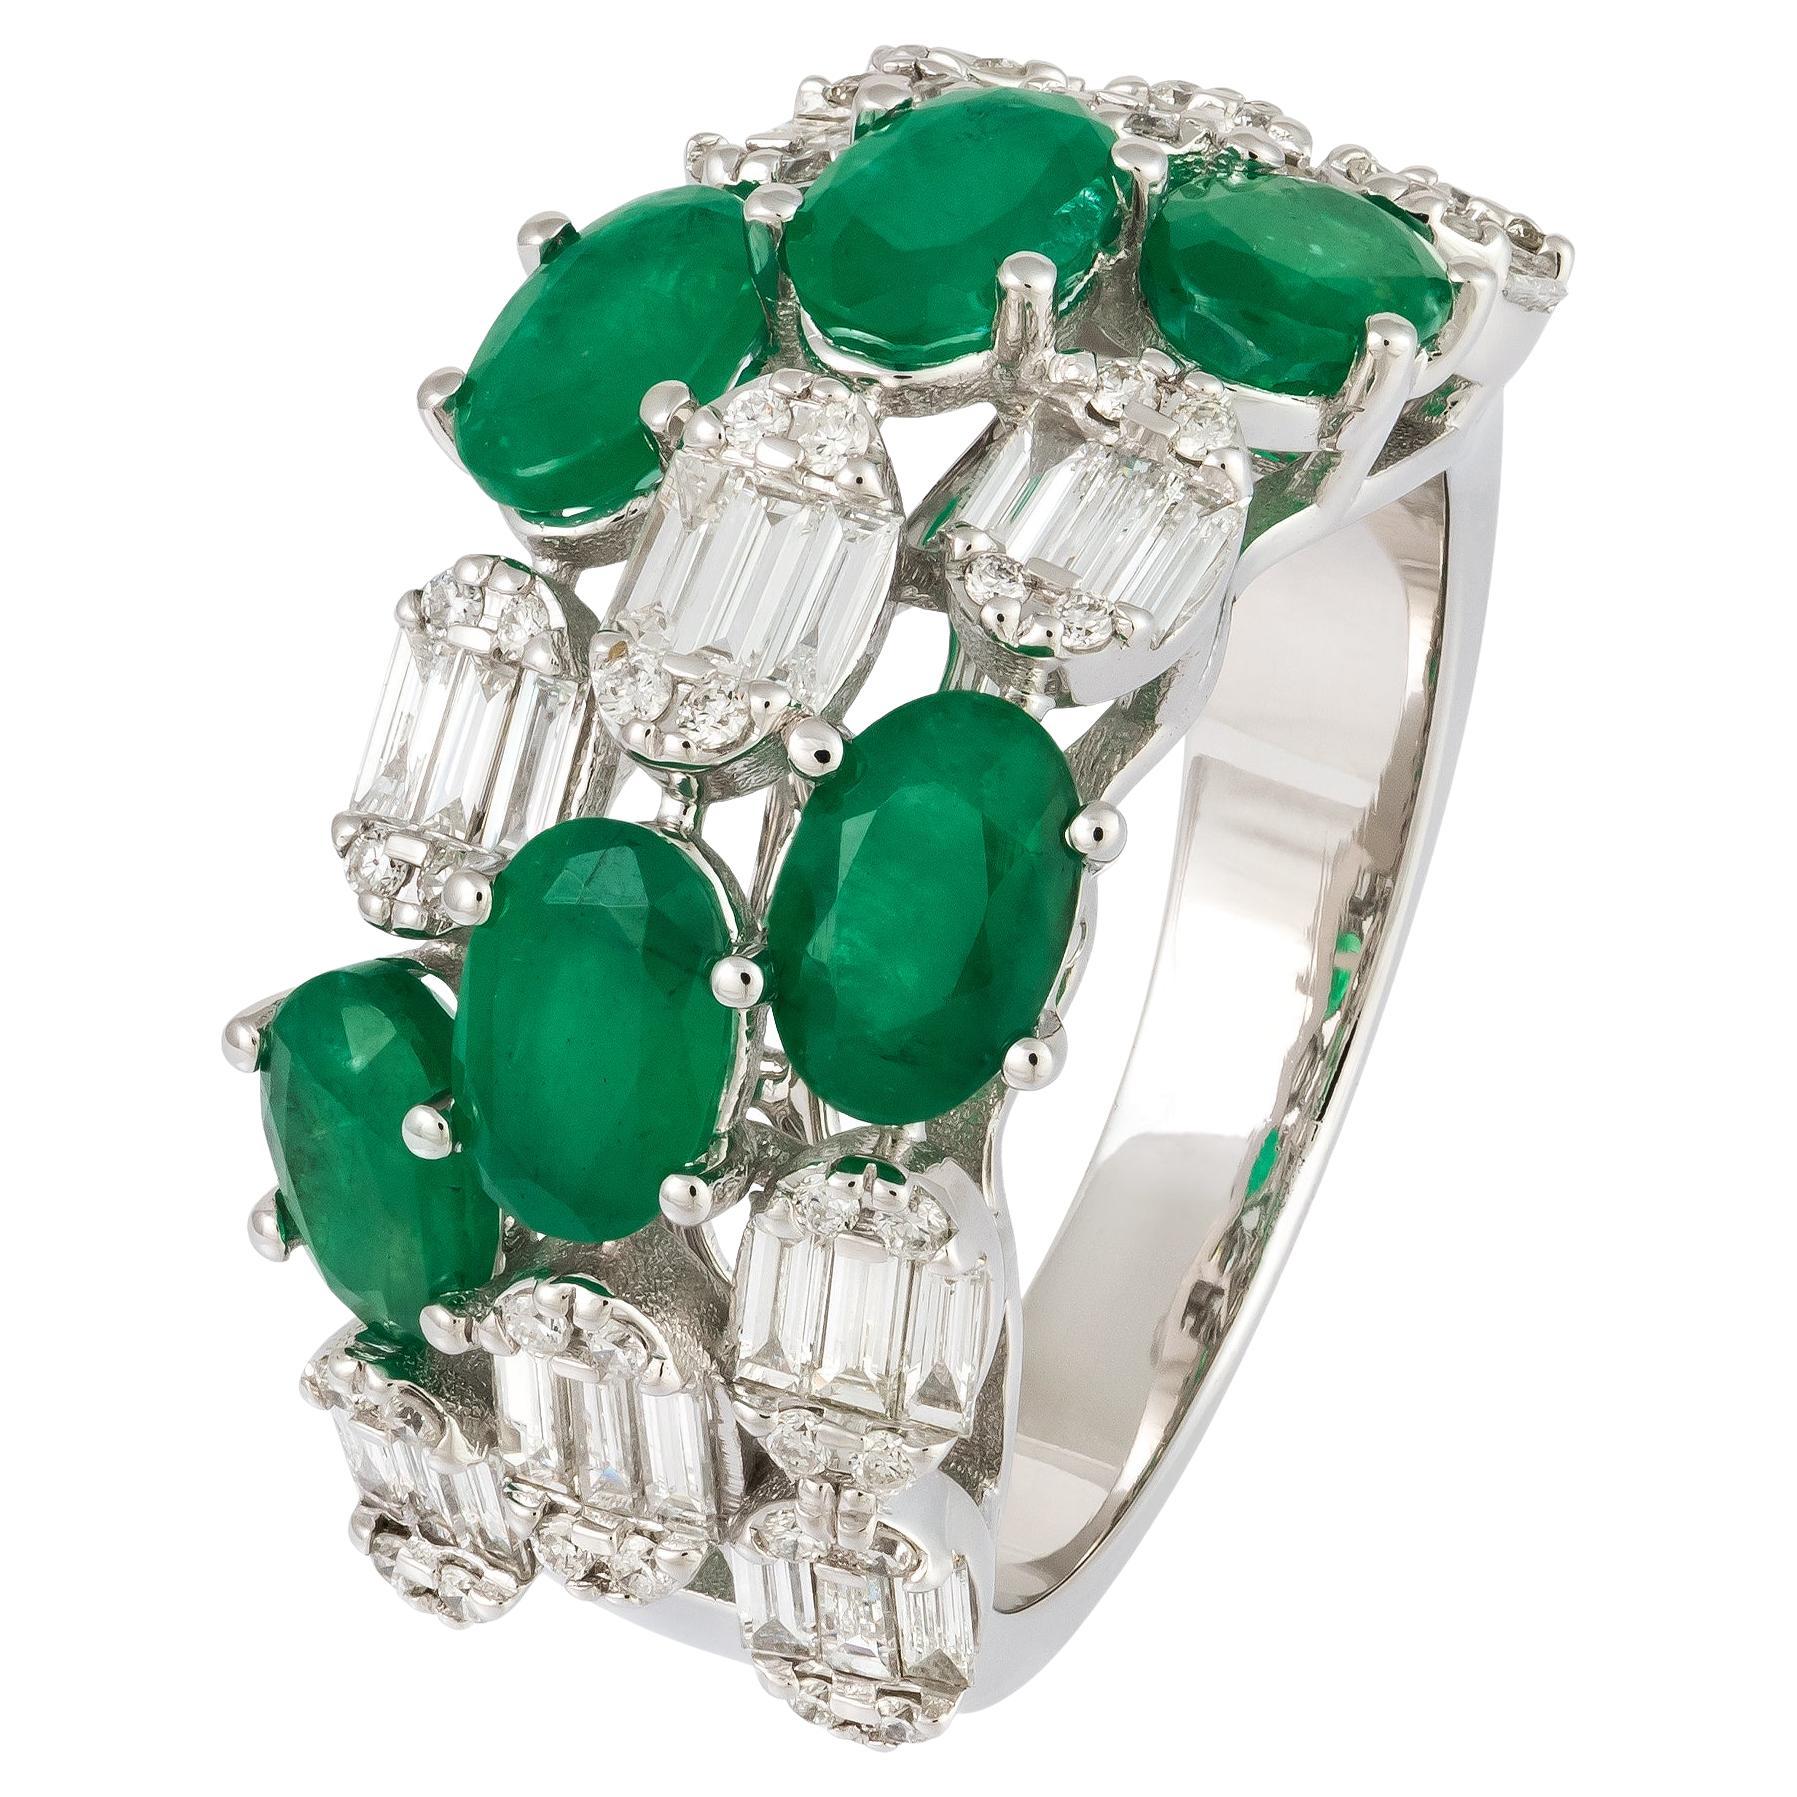 Impressive Emerald White 18K Gold White Diamond Ring for Her